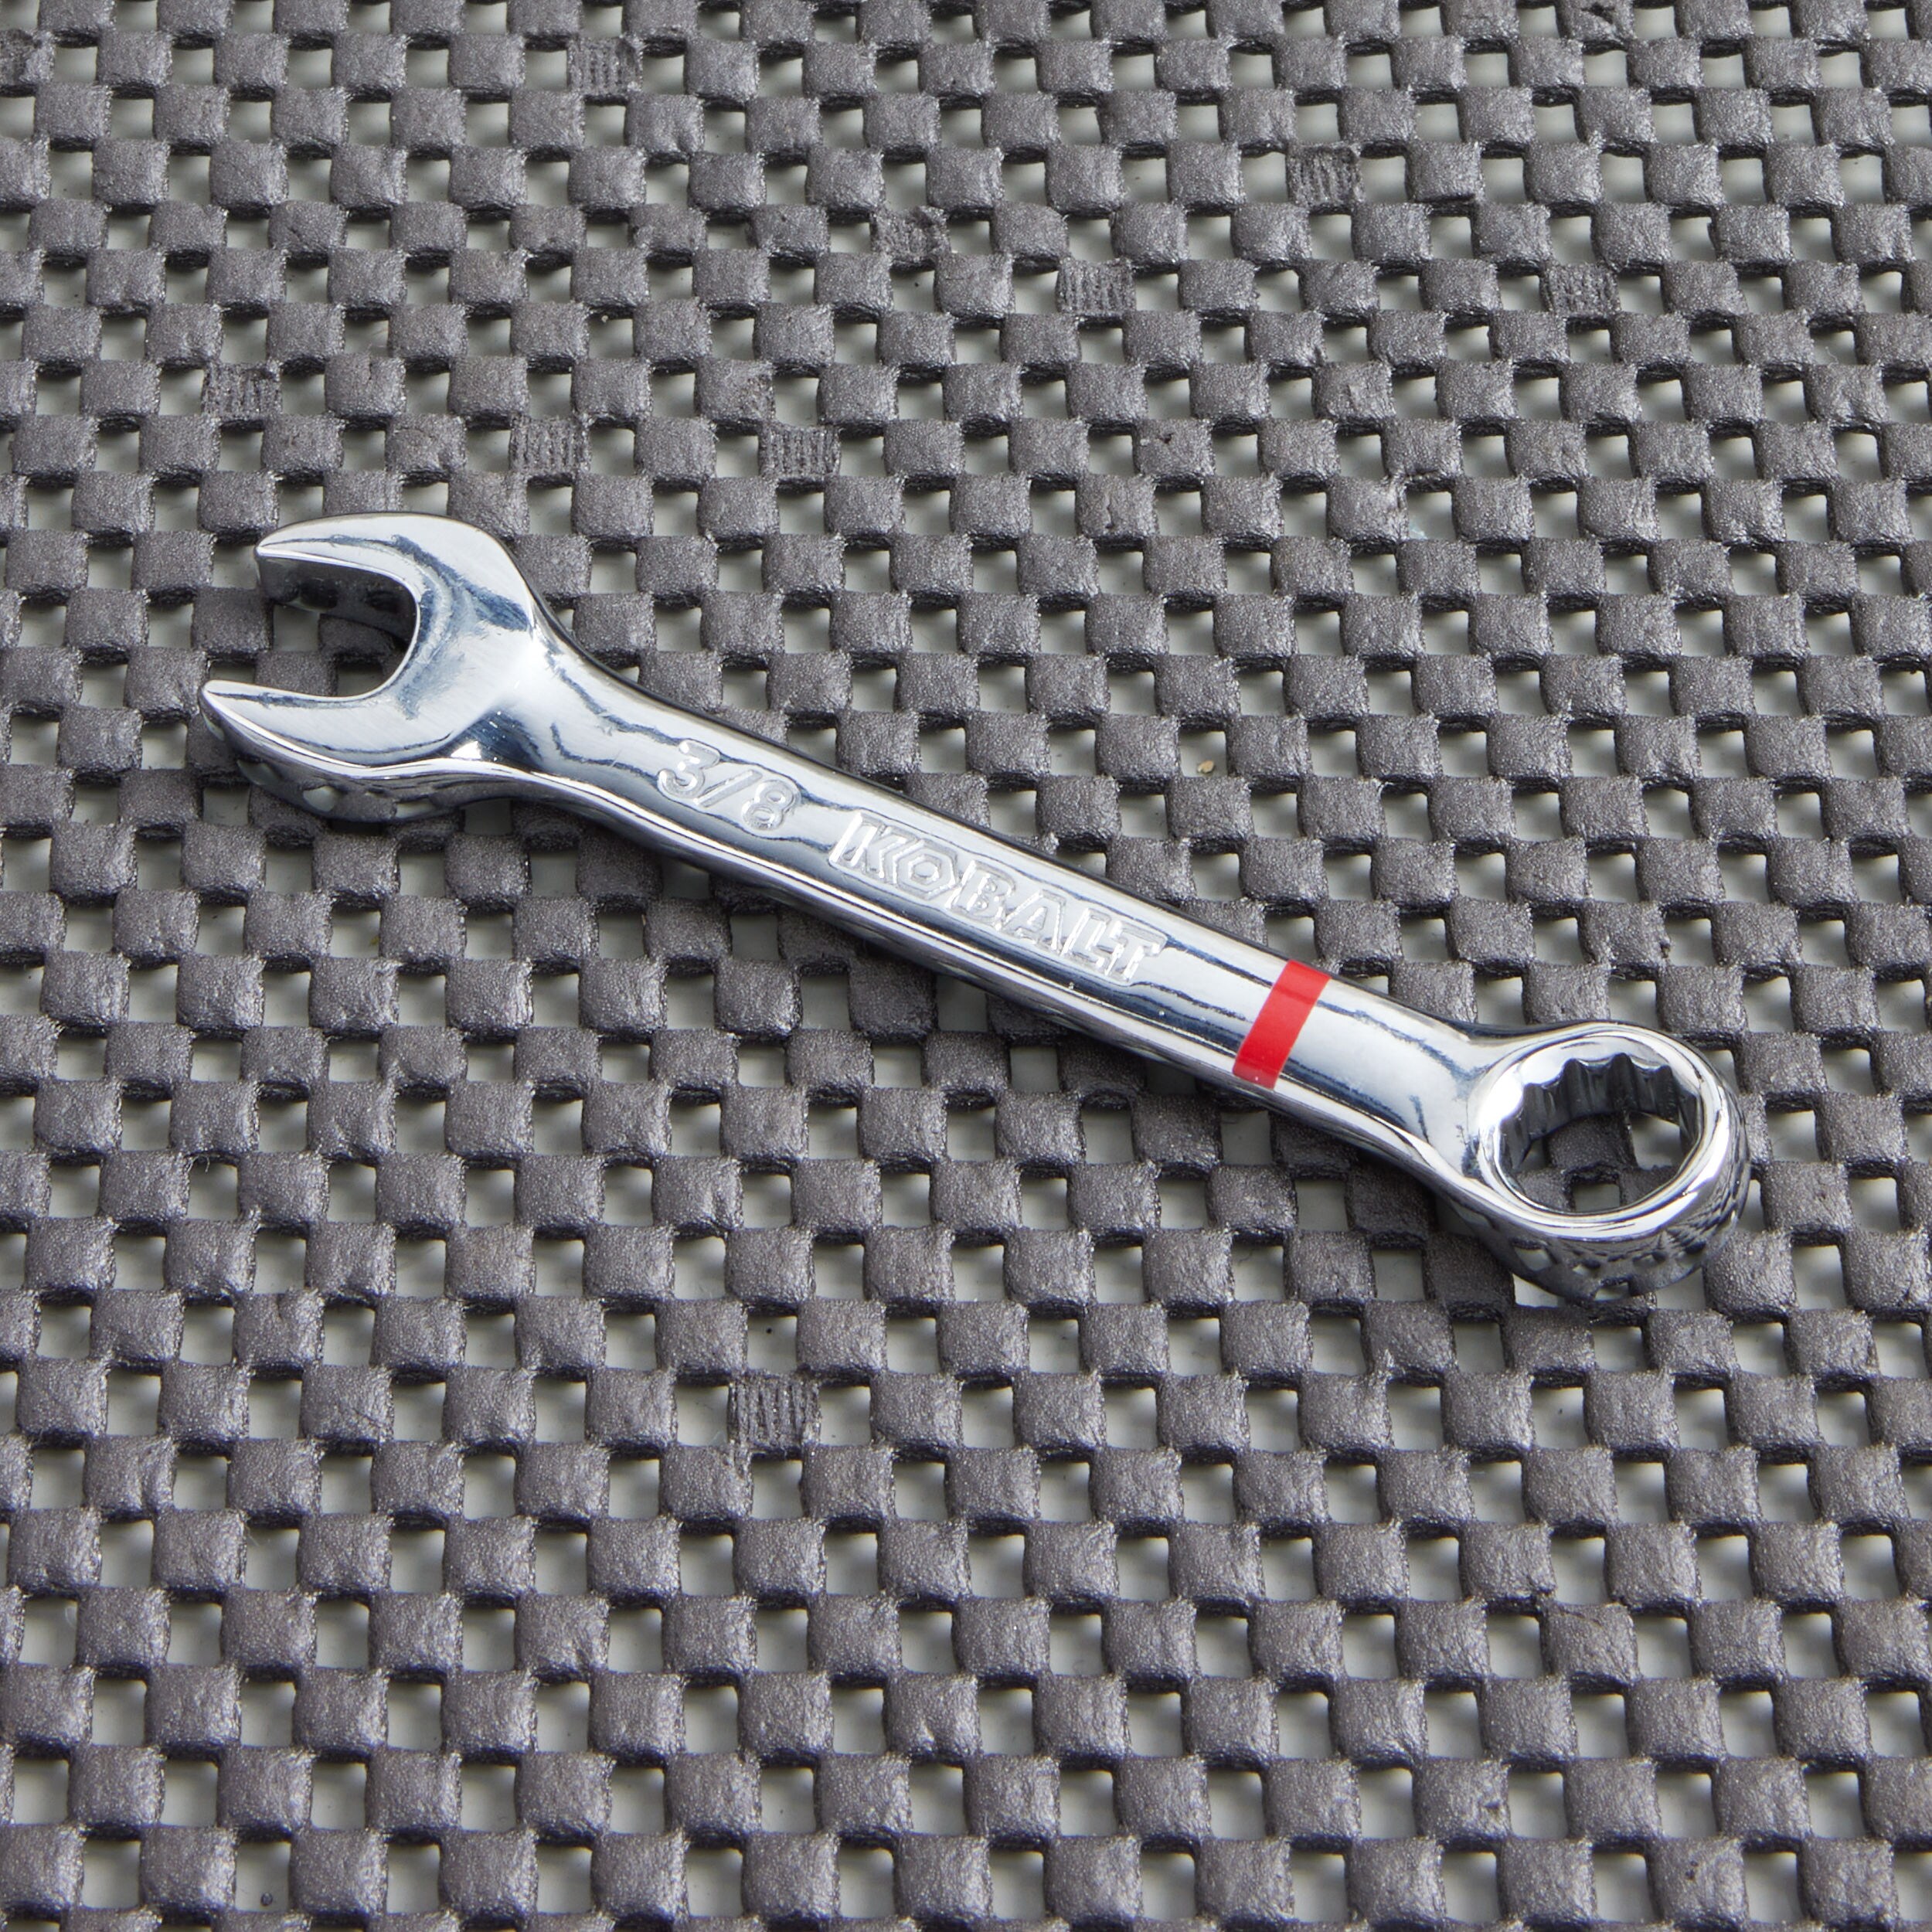 Kobalt 12 Point Standard Combination Wrench 3/8 85607